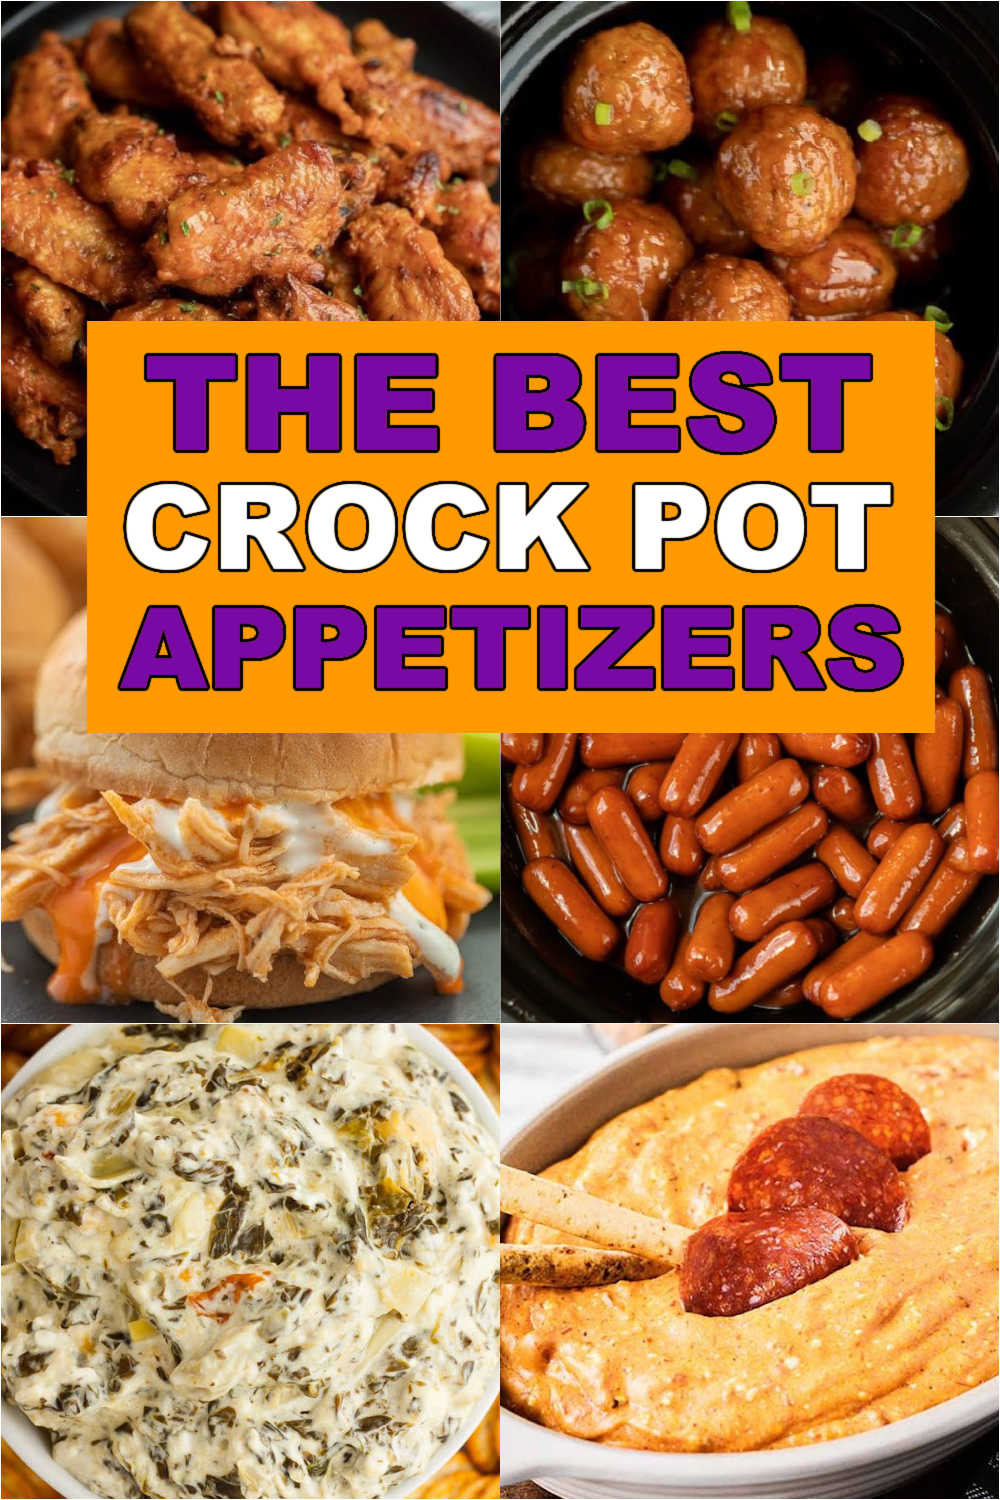 https://www.eatingonadime.com/wp-content/uploads/2022/07/Crock-Pot-Appetizers-Pin-1-1.jpg